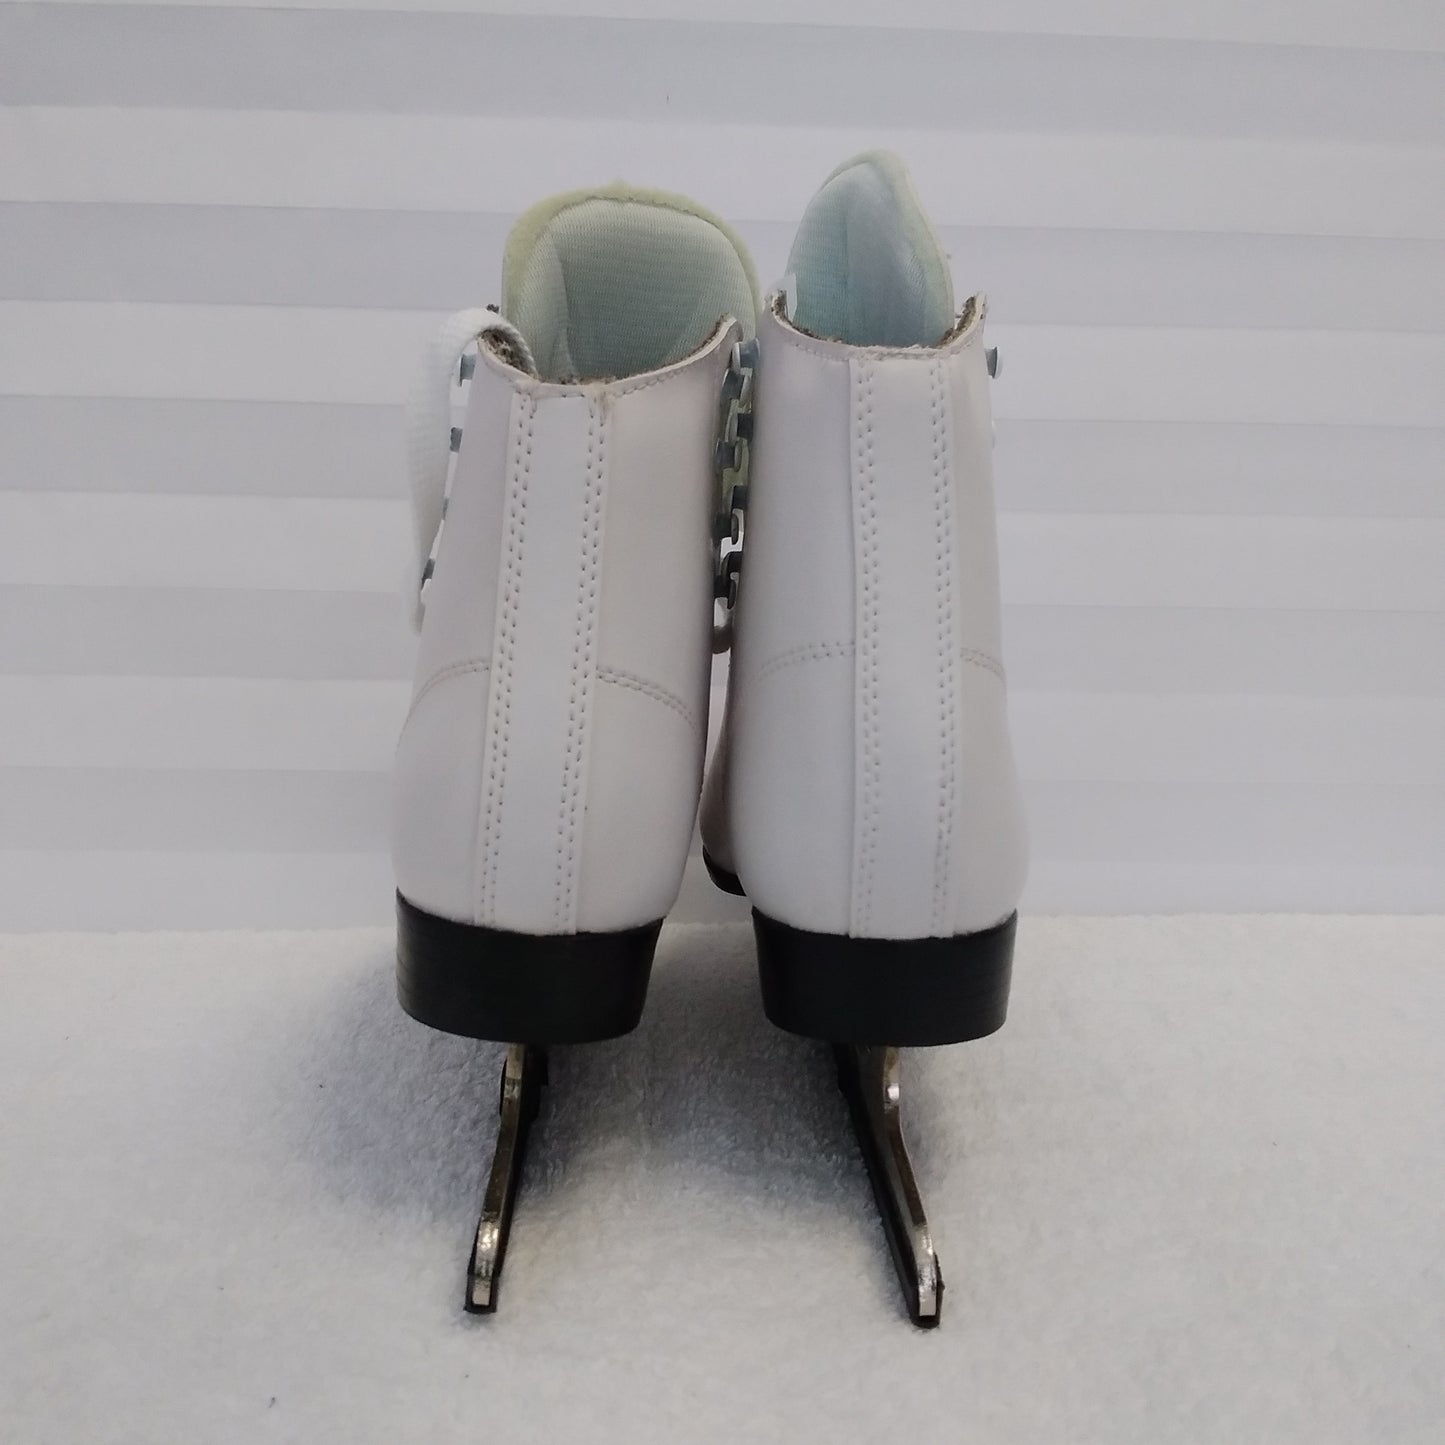 NIB - DBX Youth Series 1100 White Traditional Ice Skates - Size: 2